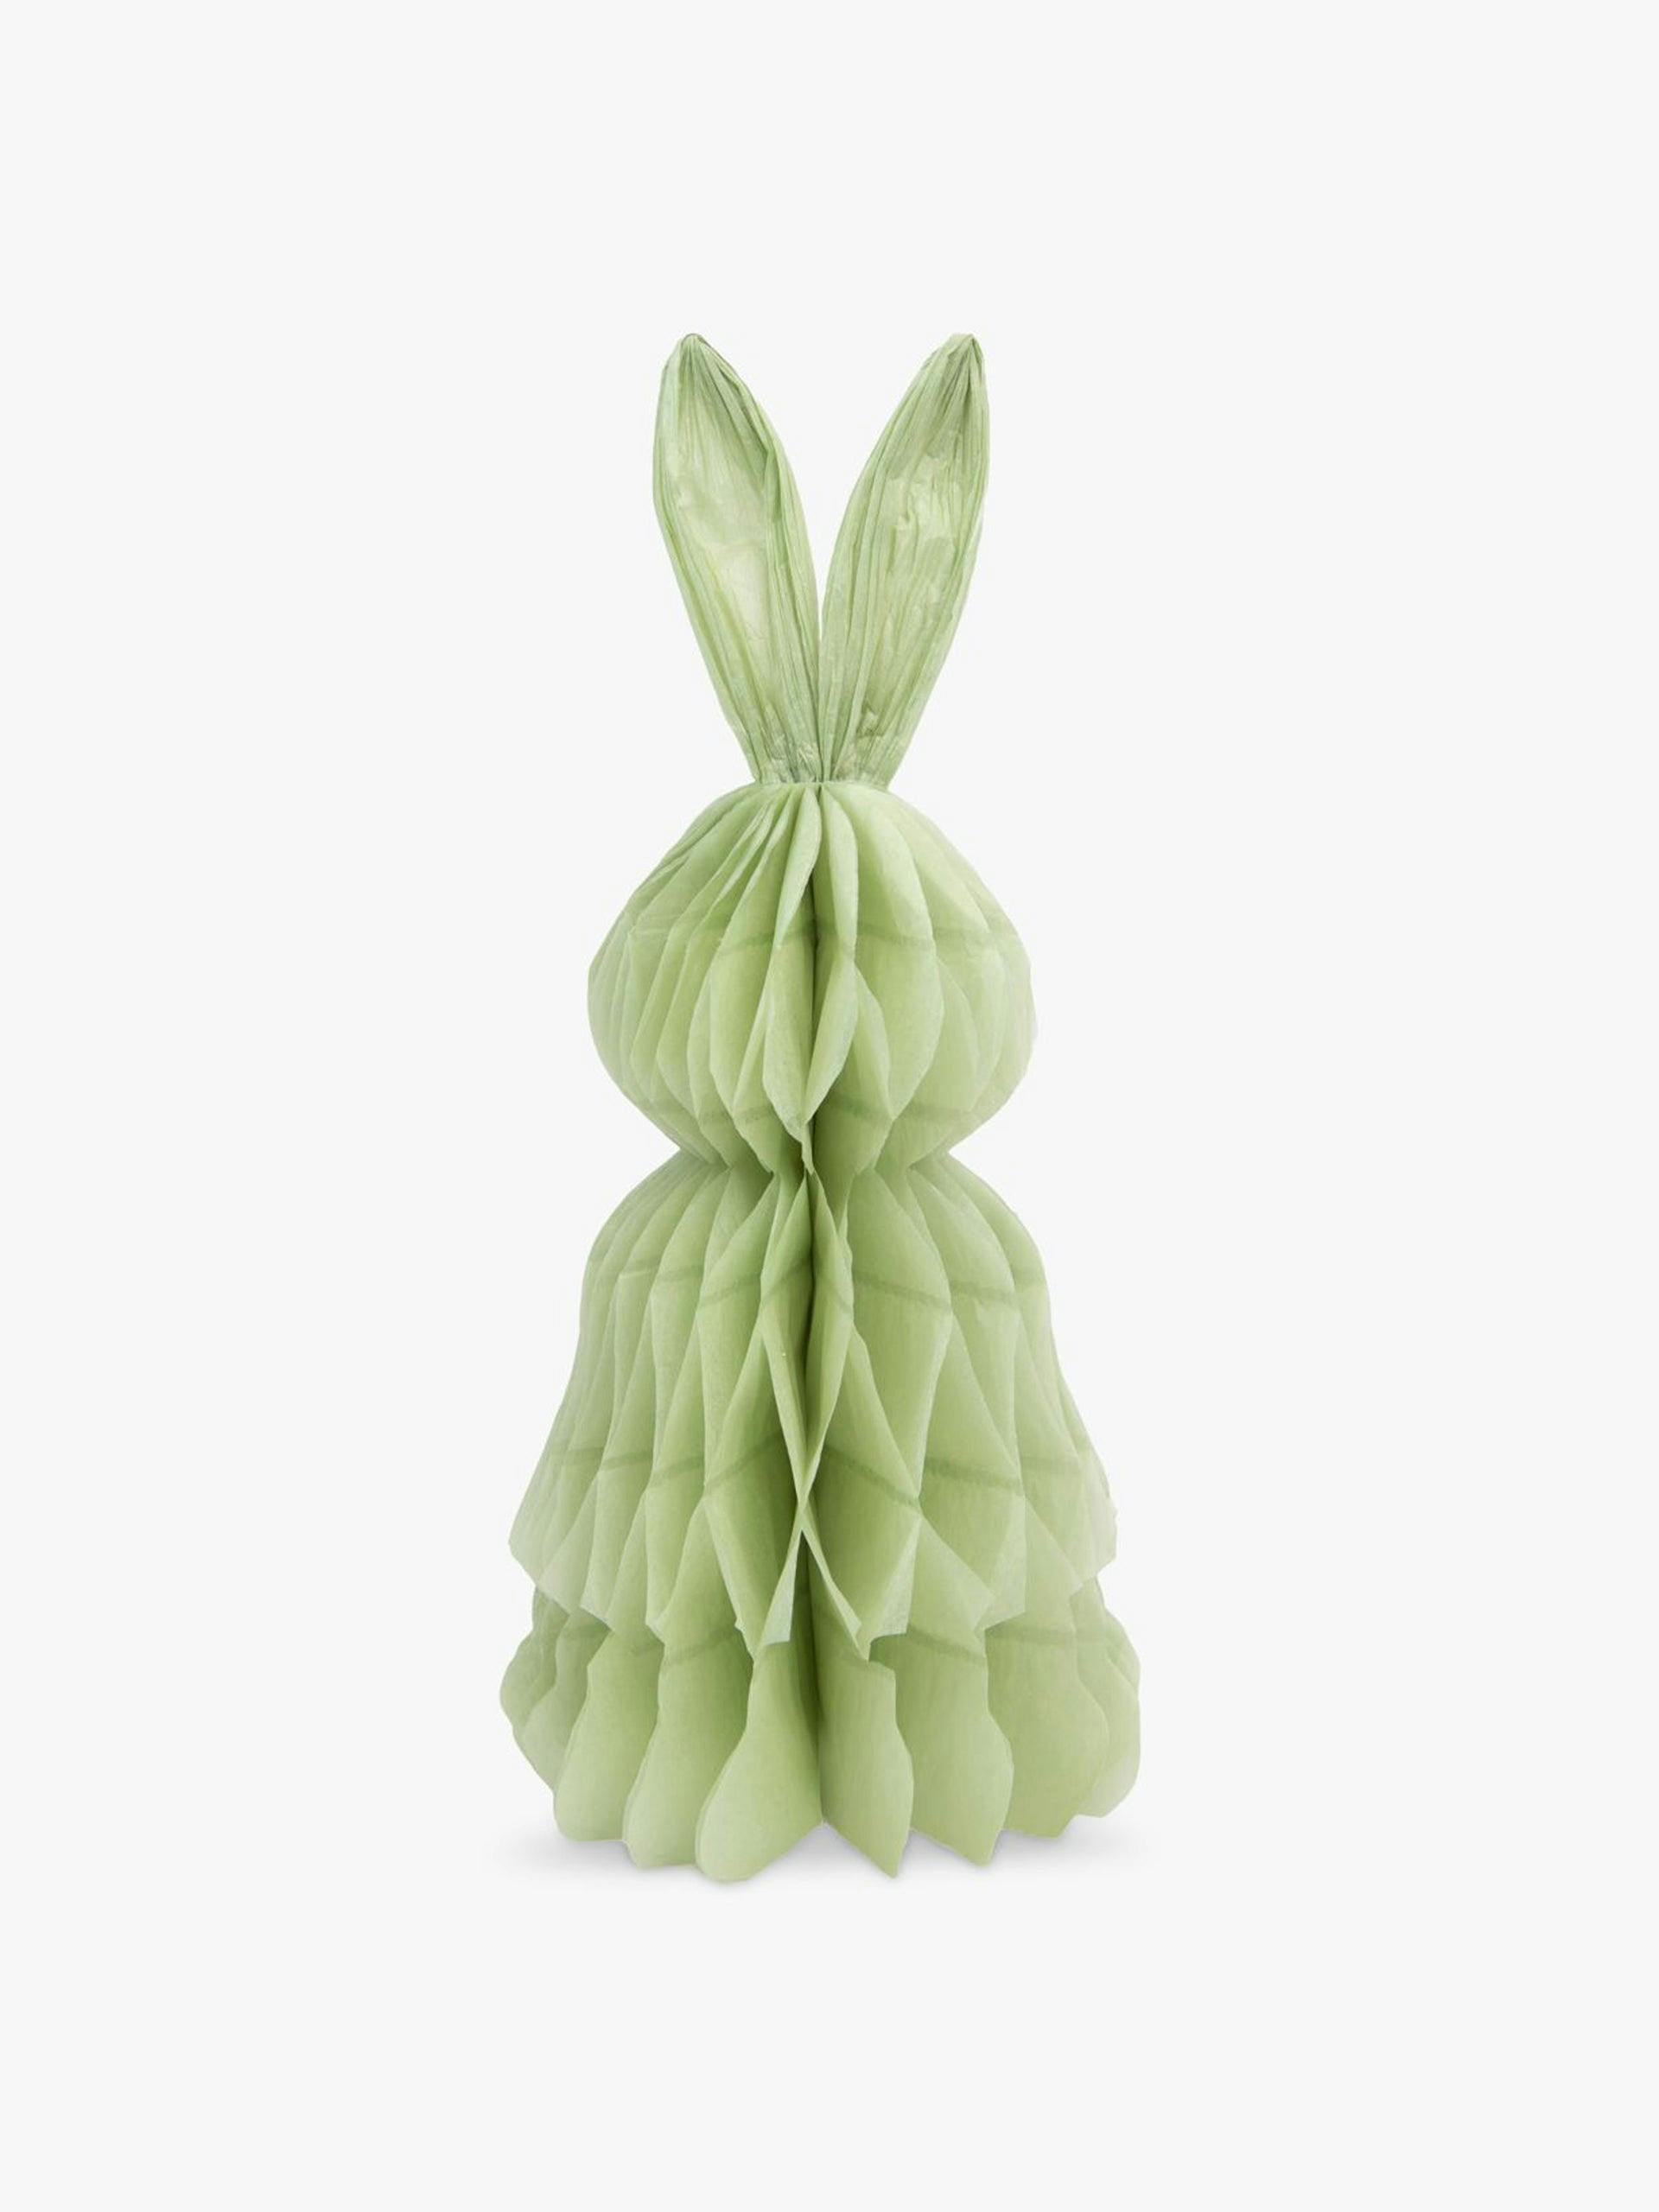 Honeycomb paper rabbit decoration